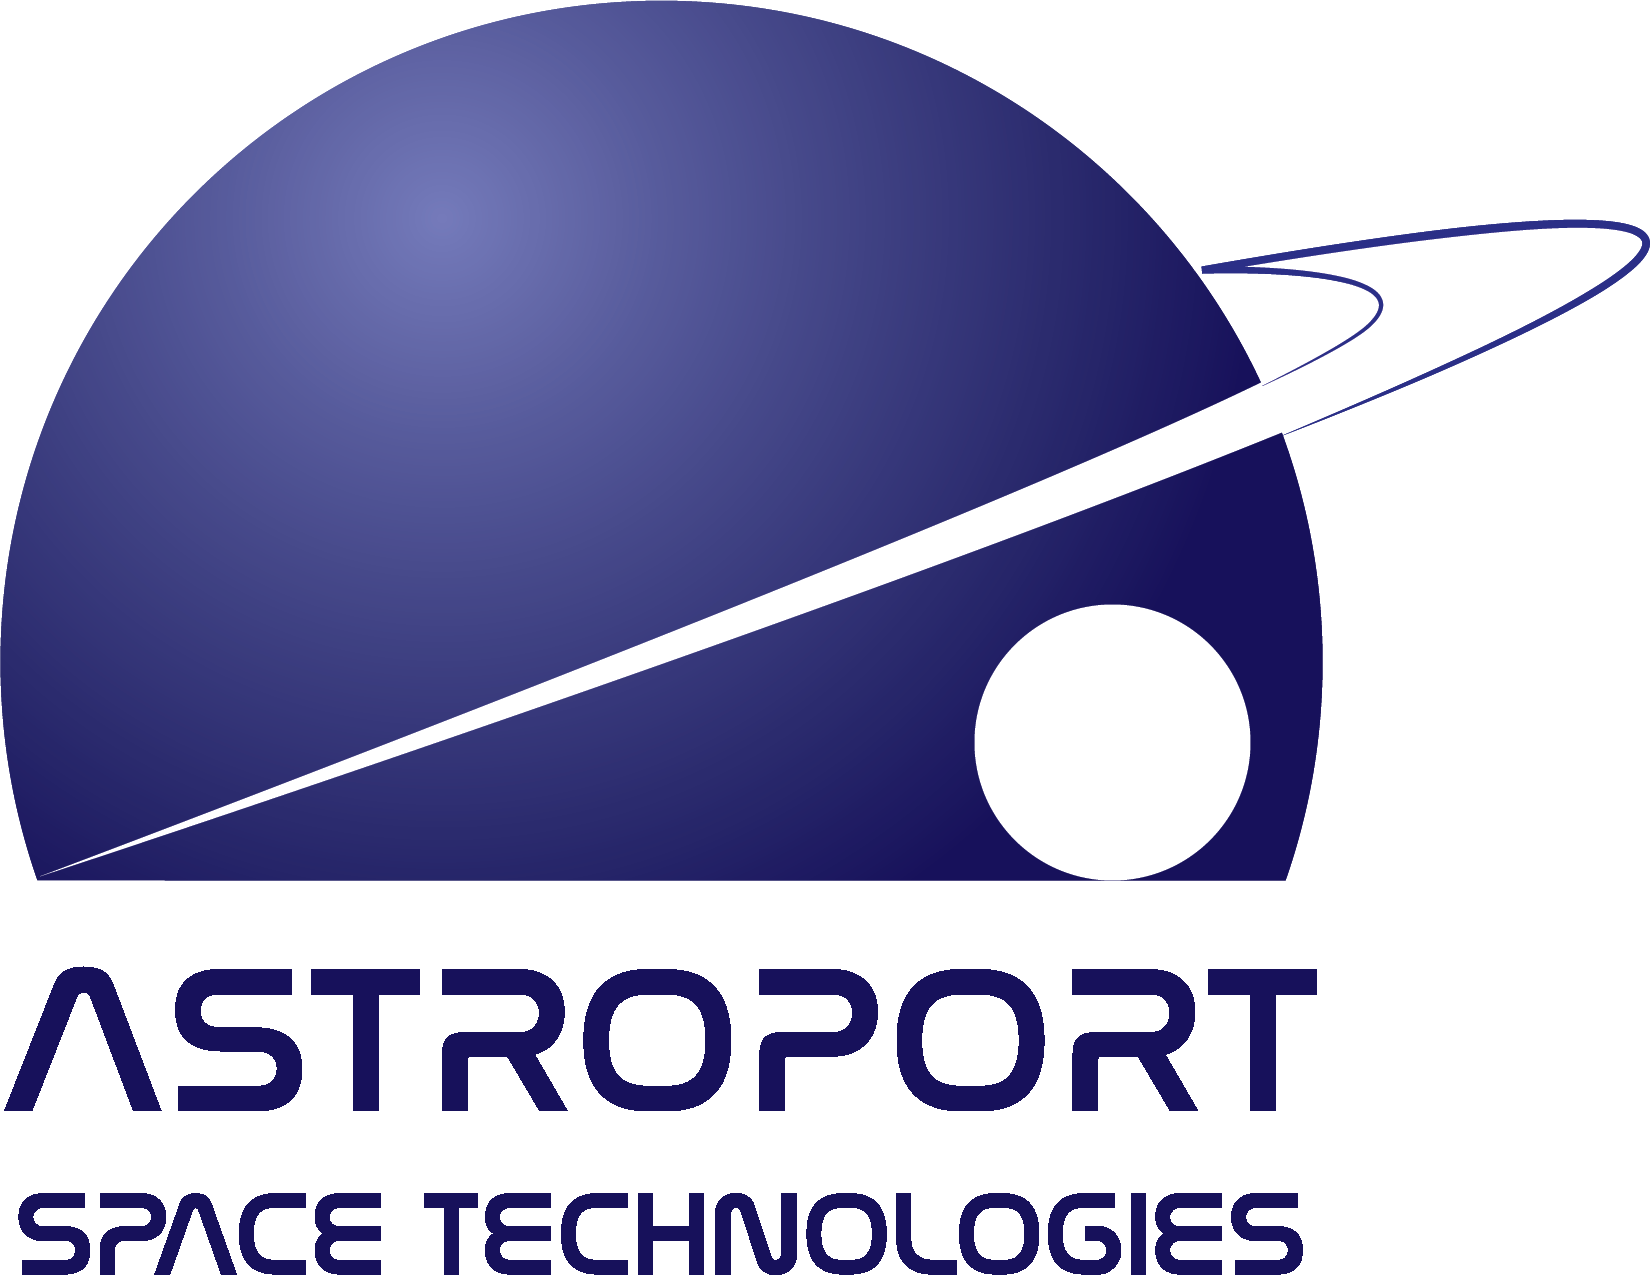 Astroport Space Technologies logo